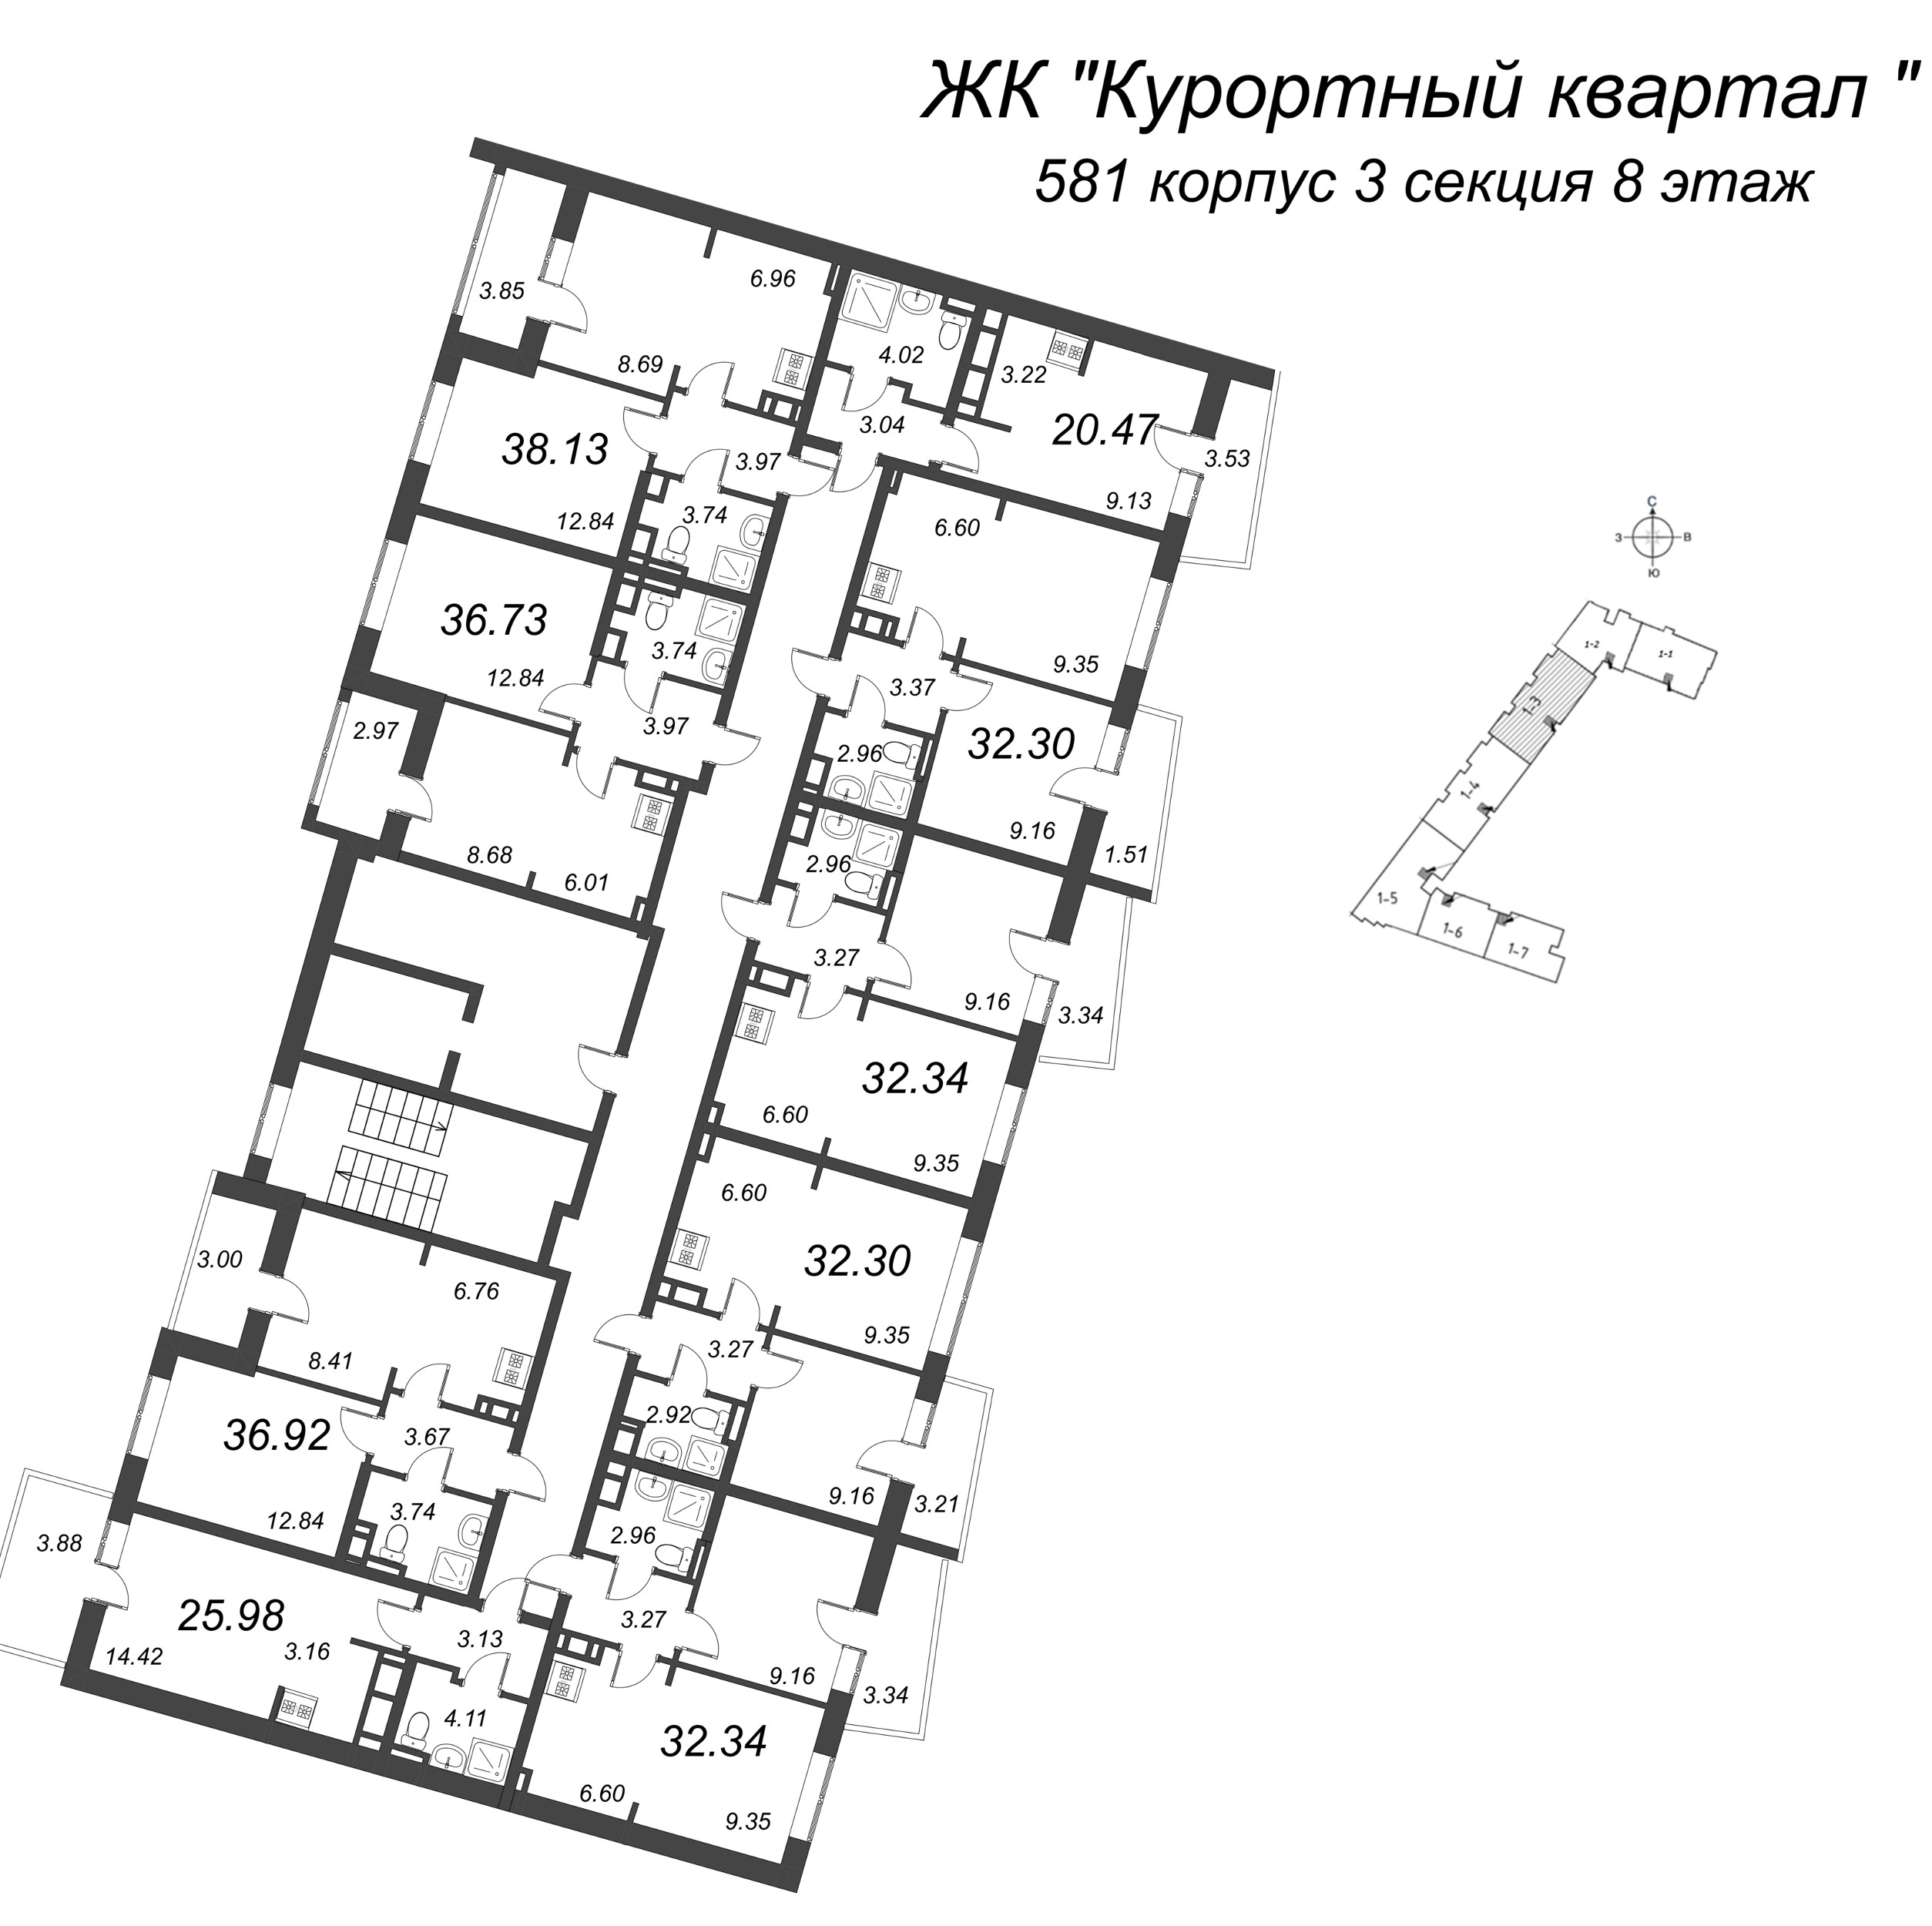 2-комнатная (Евро) квартира, 32.34 м² - планировка этажа